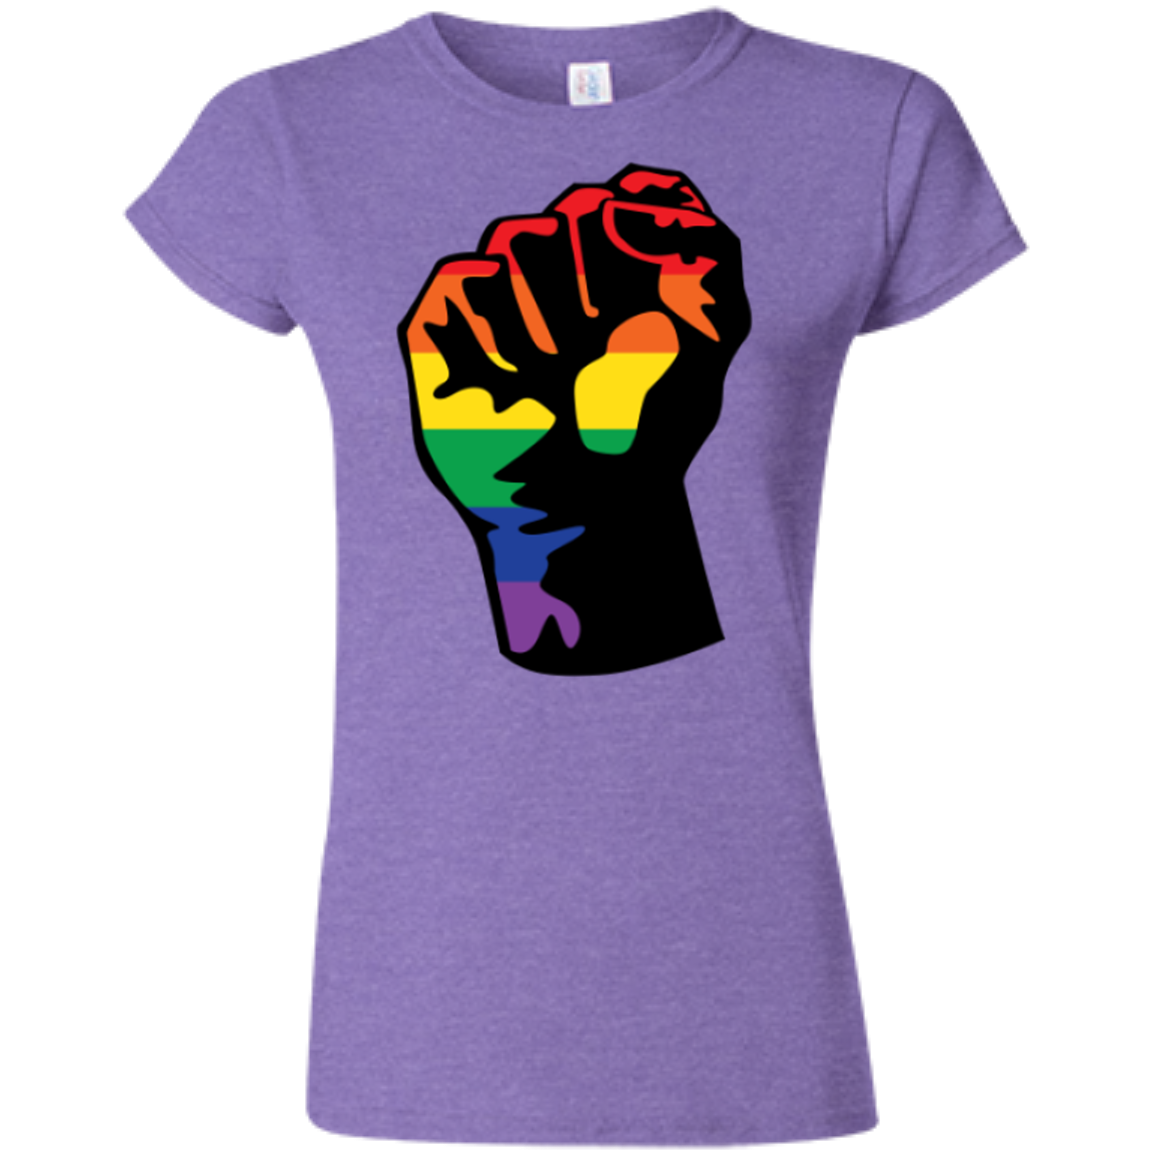 LGBT Pride Unity purple T shirt for women